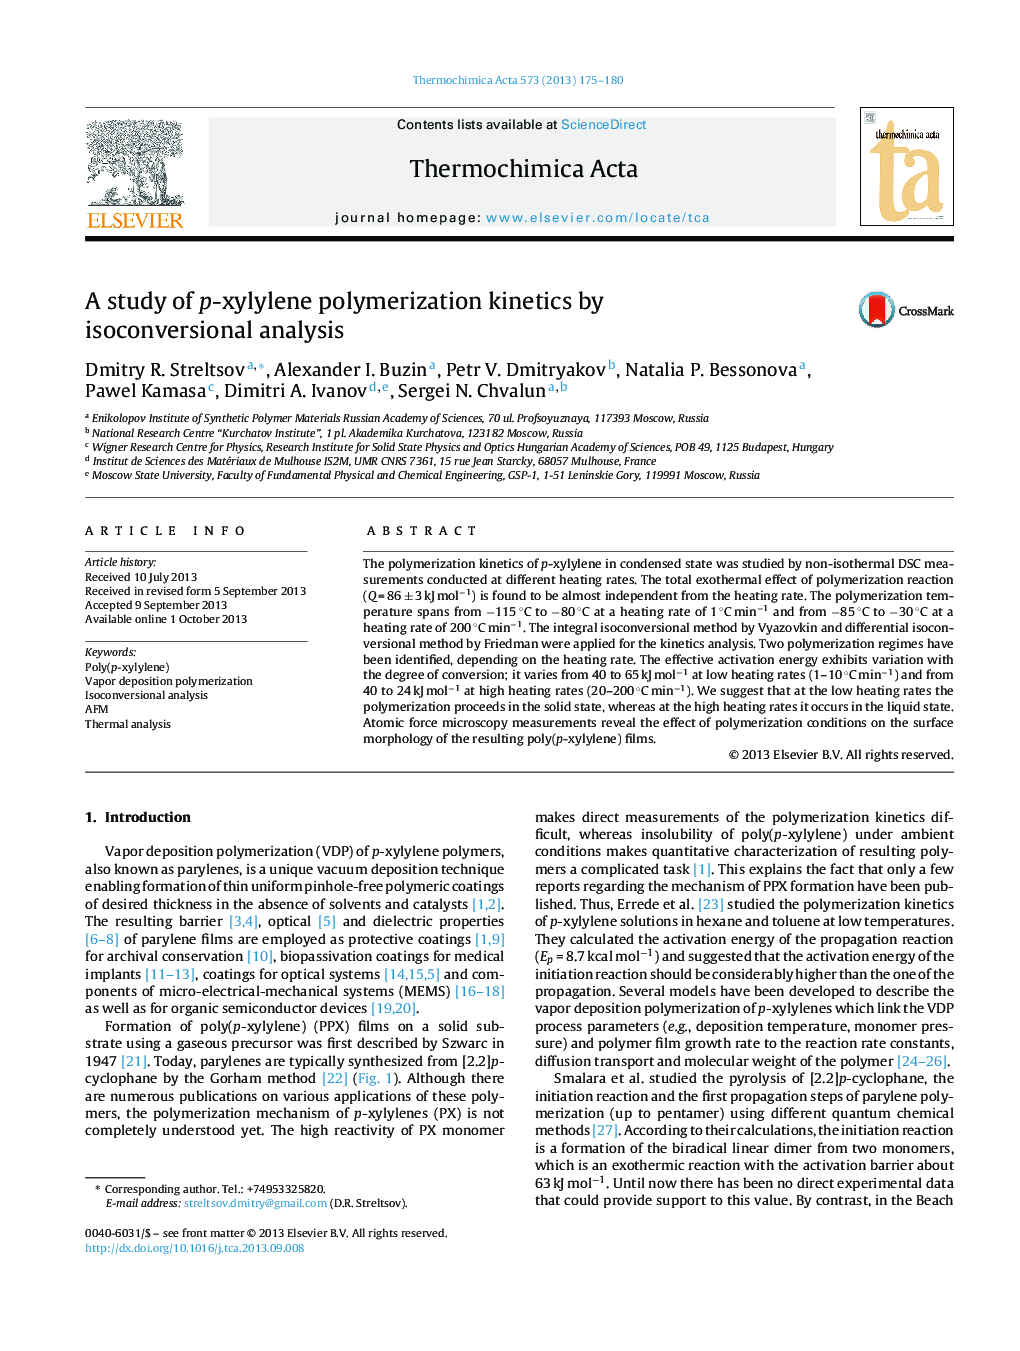 A study of p-xylylene polymerization kinetics by isoconversional analysis